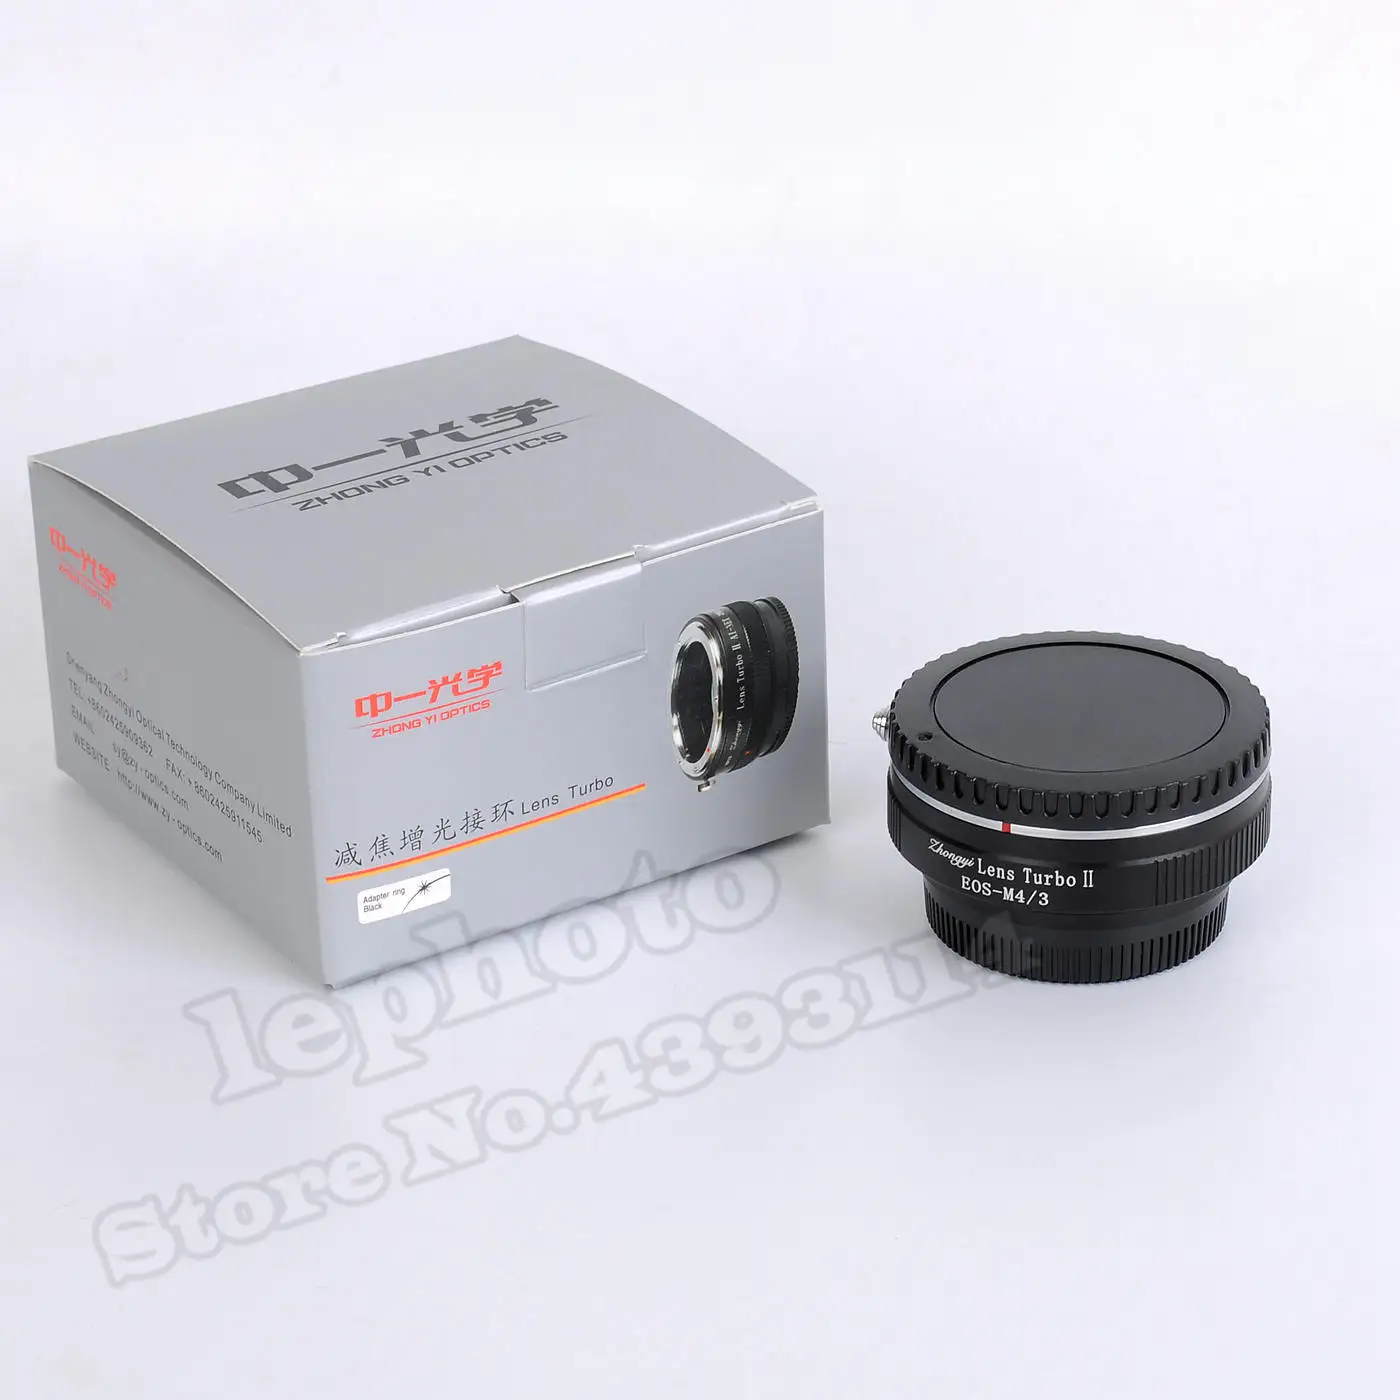 Mitakon Zhongyi Объектив Turbo II фокусный редуктор усилитель адаптер для Canon EOS EF объектив к Micro Four Thirds камера M4/3 MFT GH4 OM-D